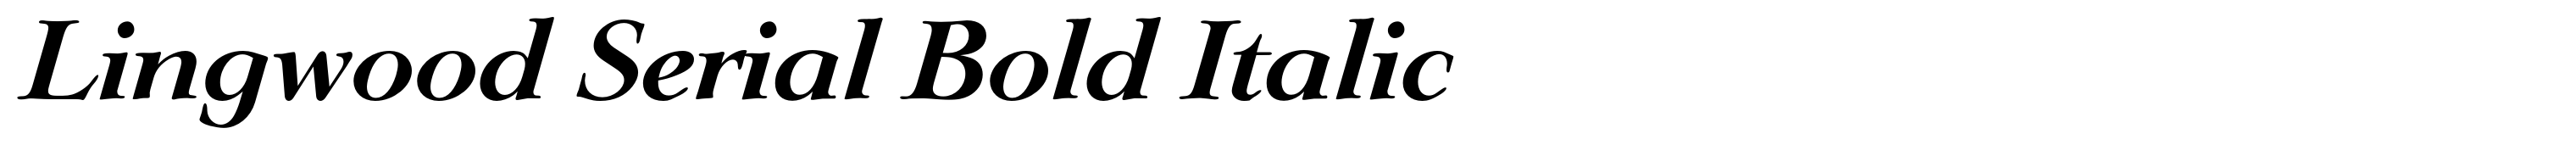 Lingwood Serial Bold Italic